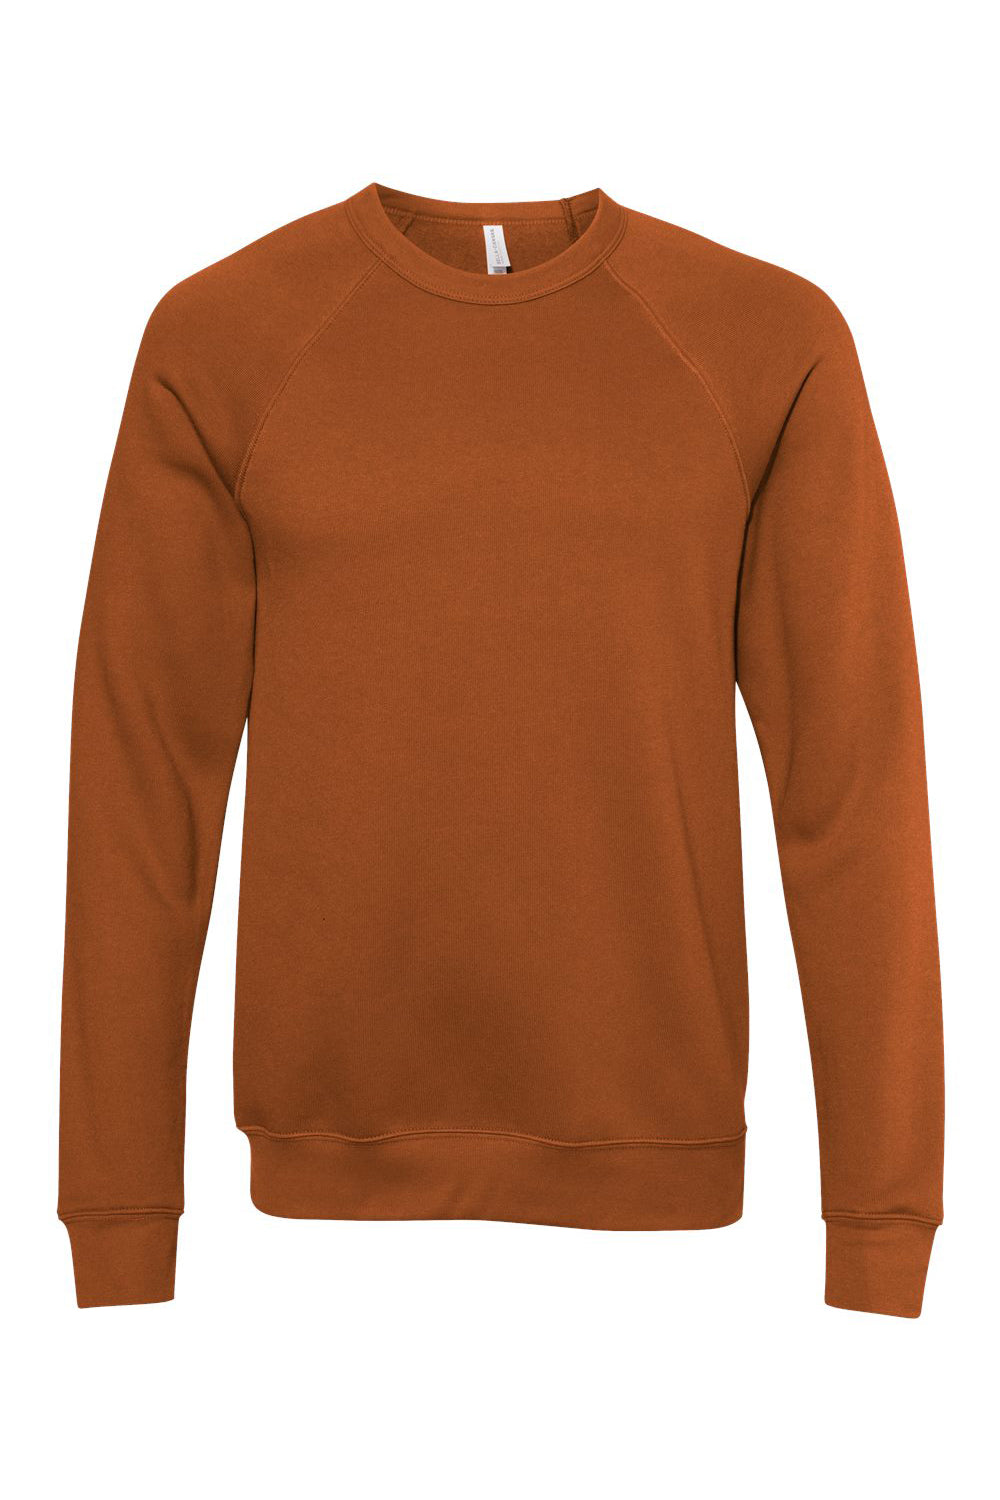 Bella + Canvas BC3901/3901 Mens Sponge Fleece Crewneck Sweatshirt Autumn Orange Flat Front